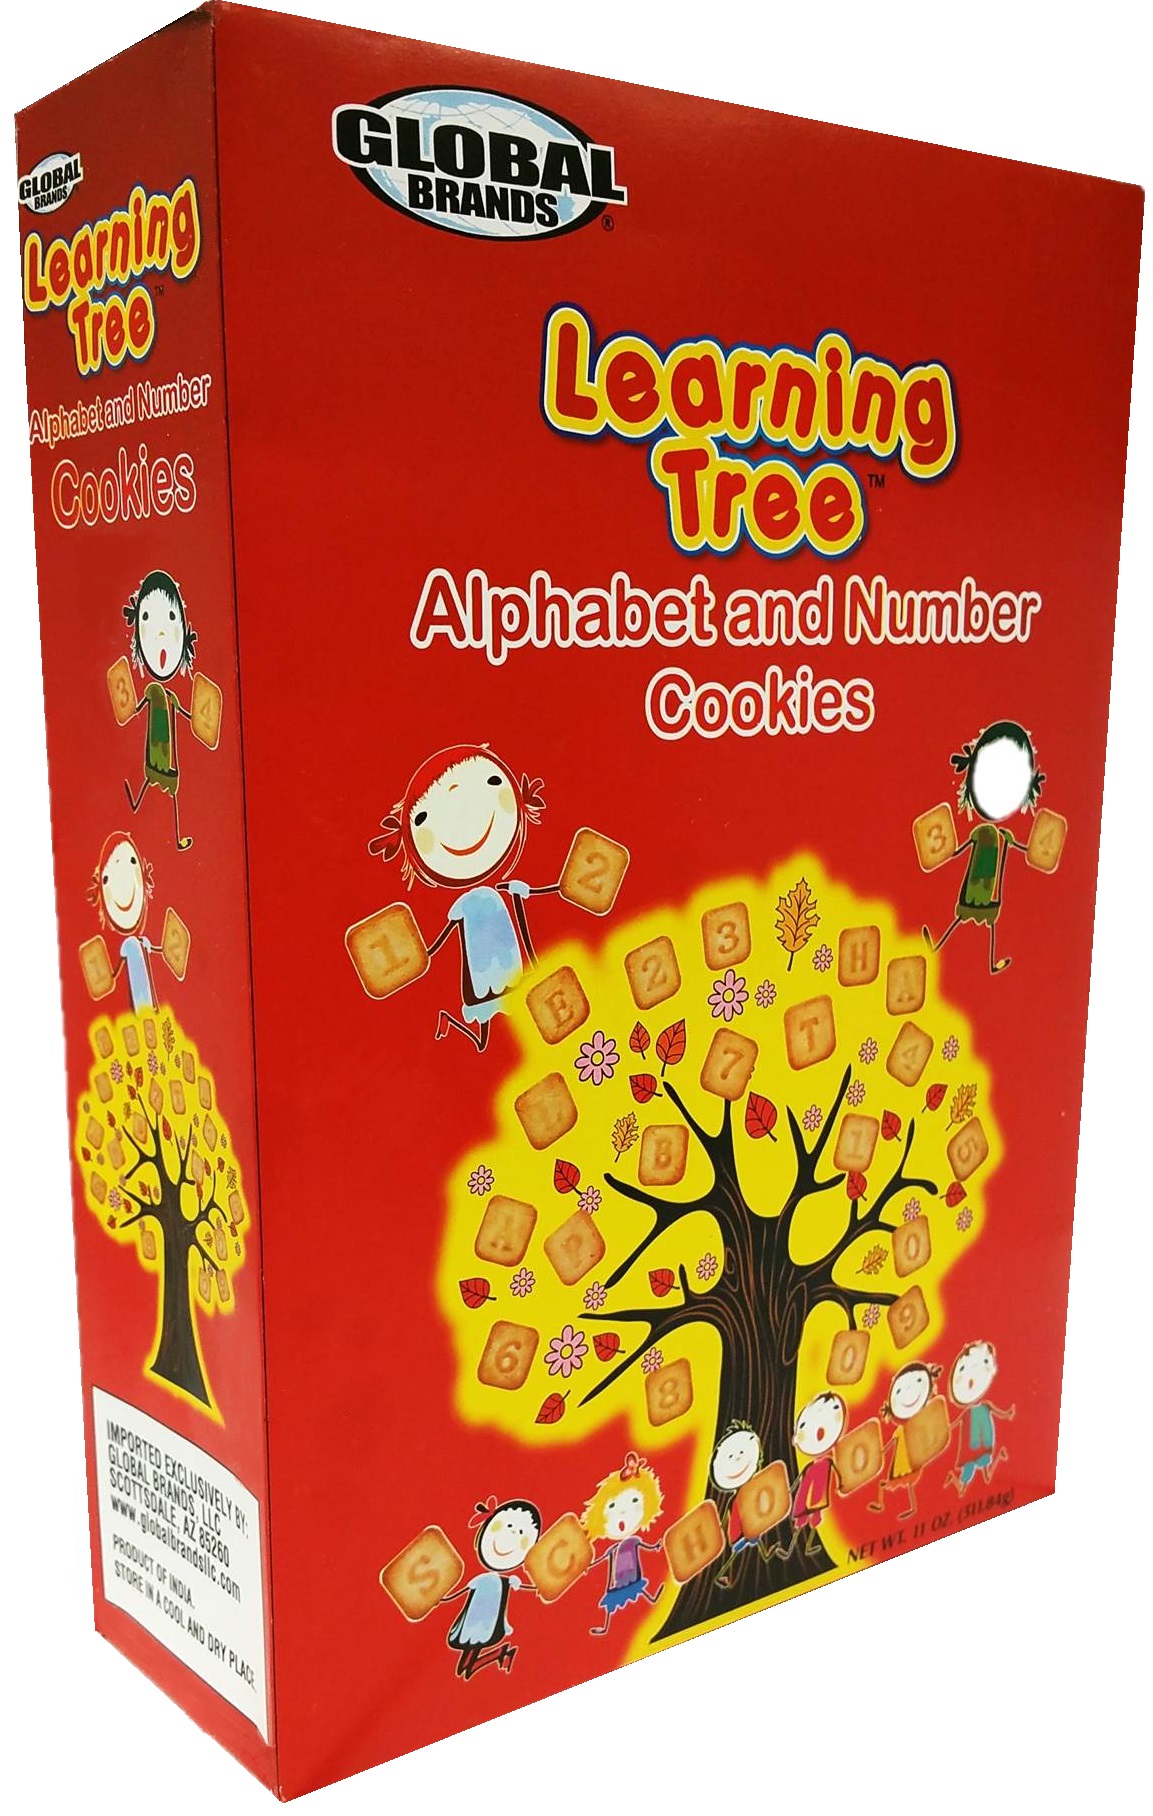 11oz Learning Tree Cookies